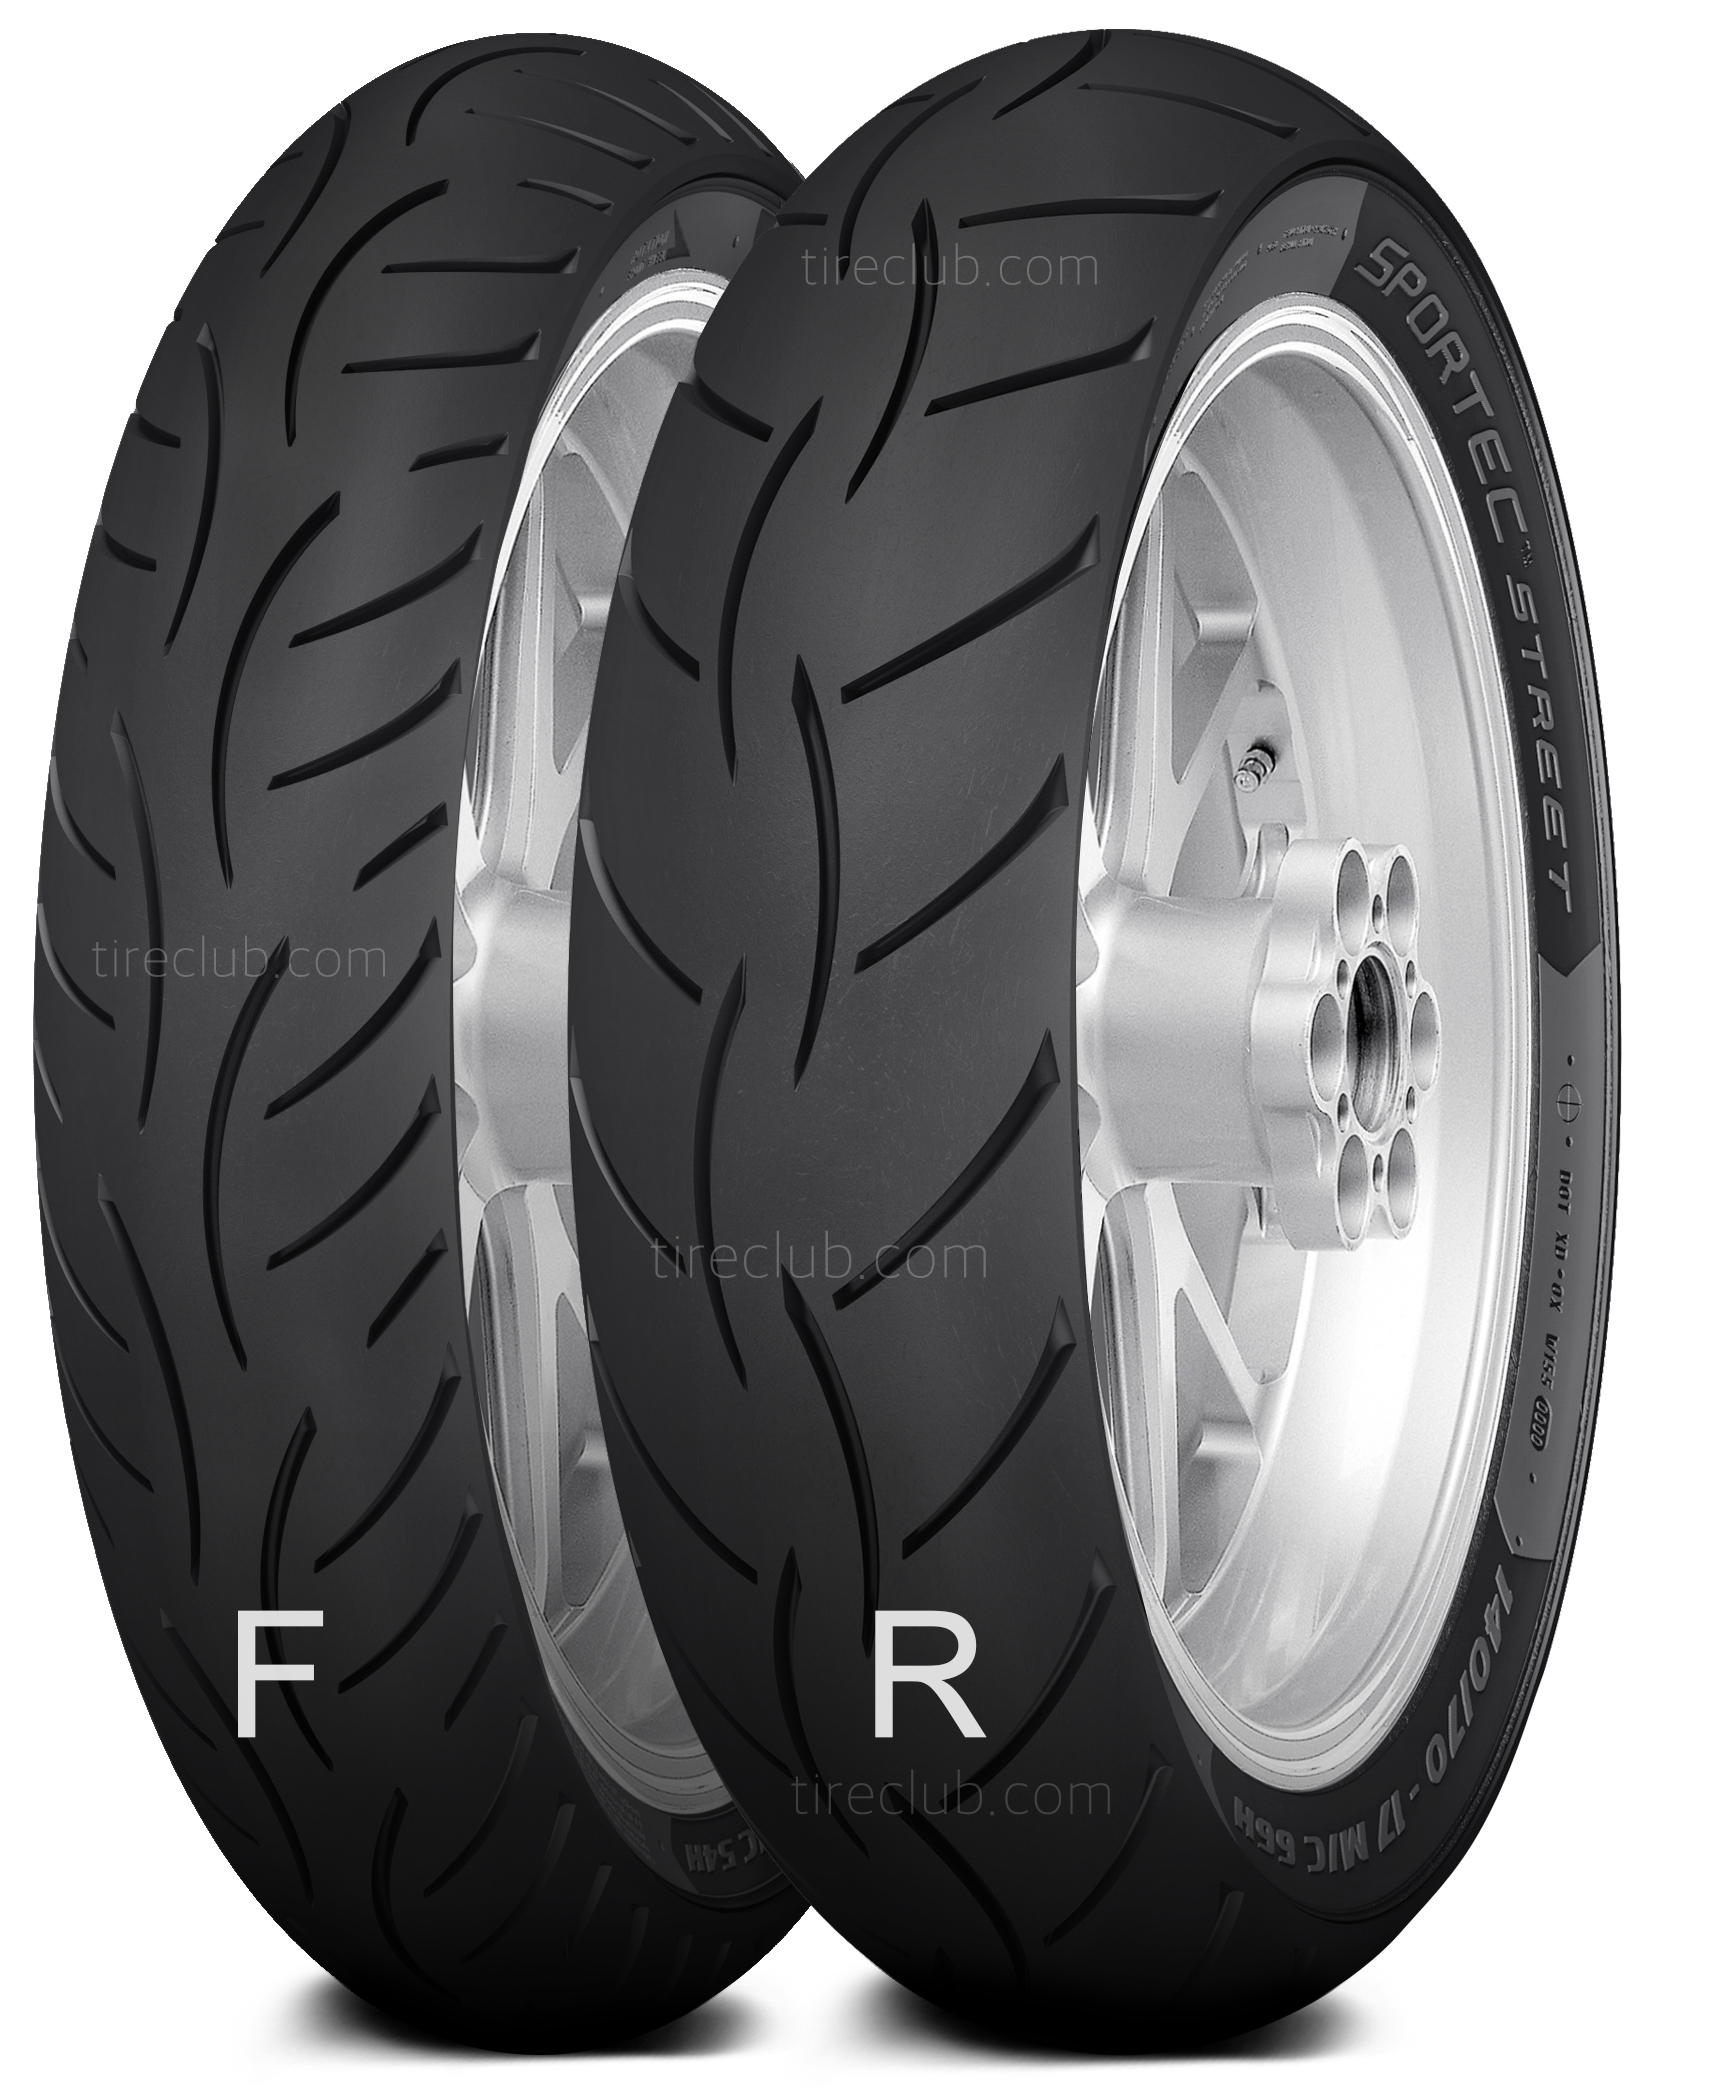 70/90 - 17 M/C Tires | TIRECLUB International